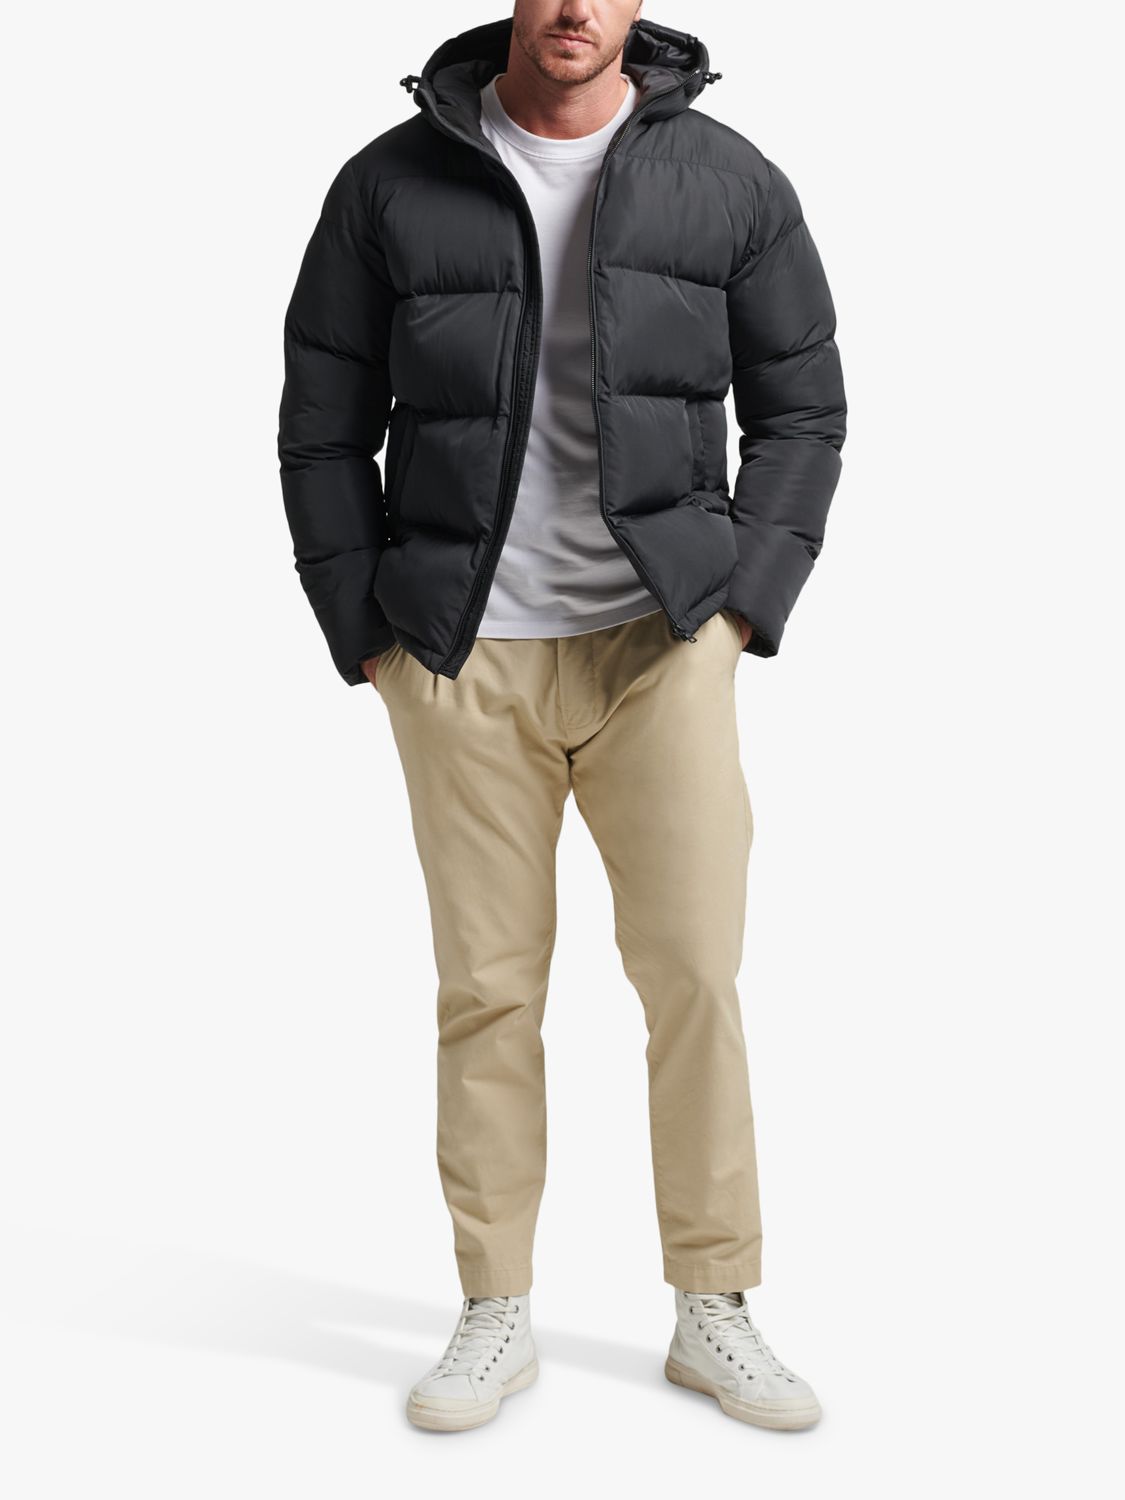 Superdry Short Hooded Puffer Jacket, Black, S